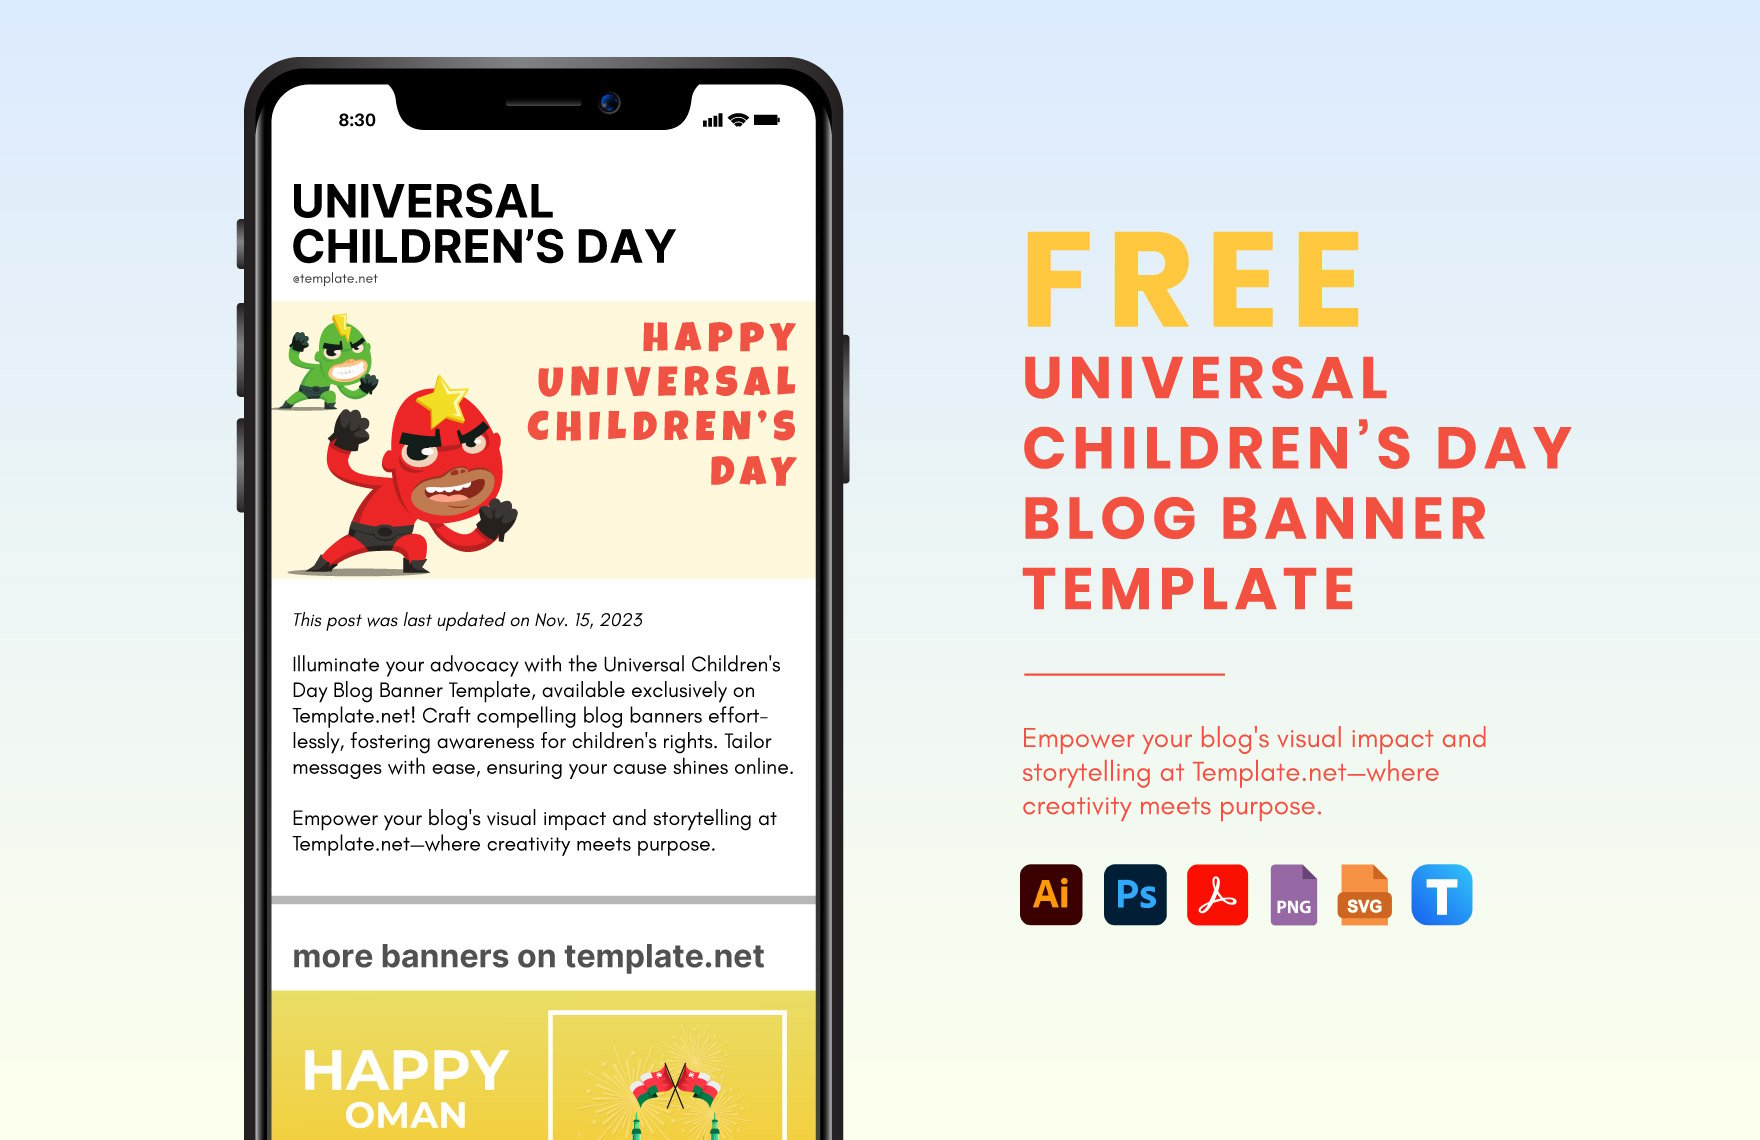 Universal Children’s Day Blog Banner Template